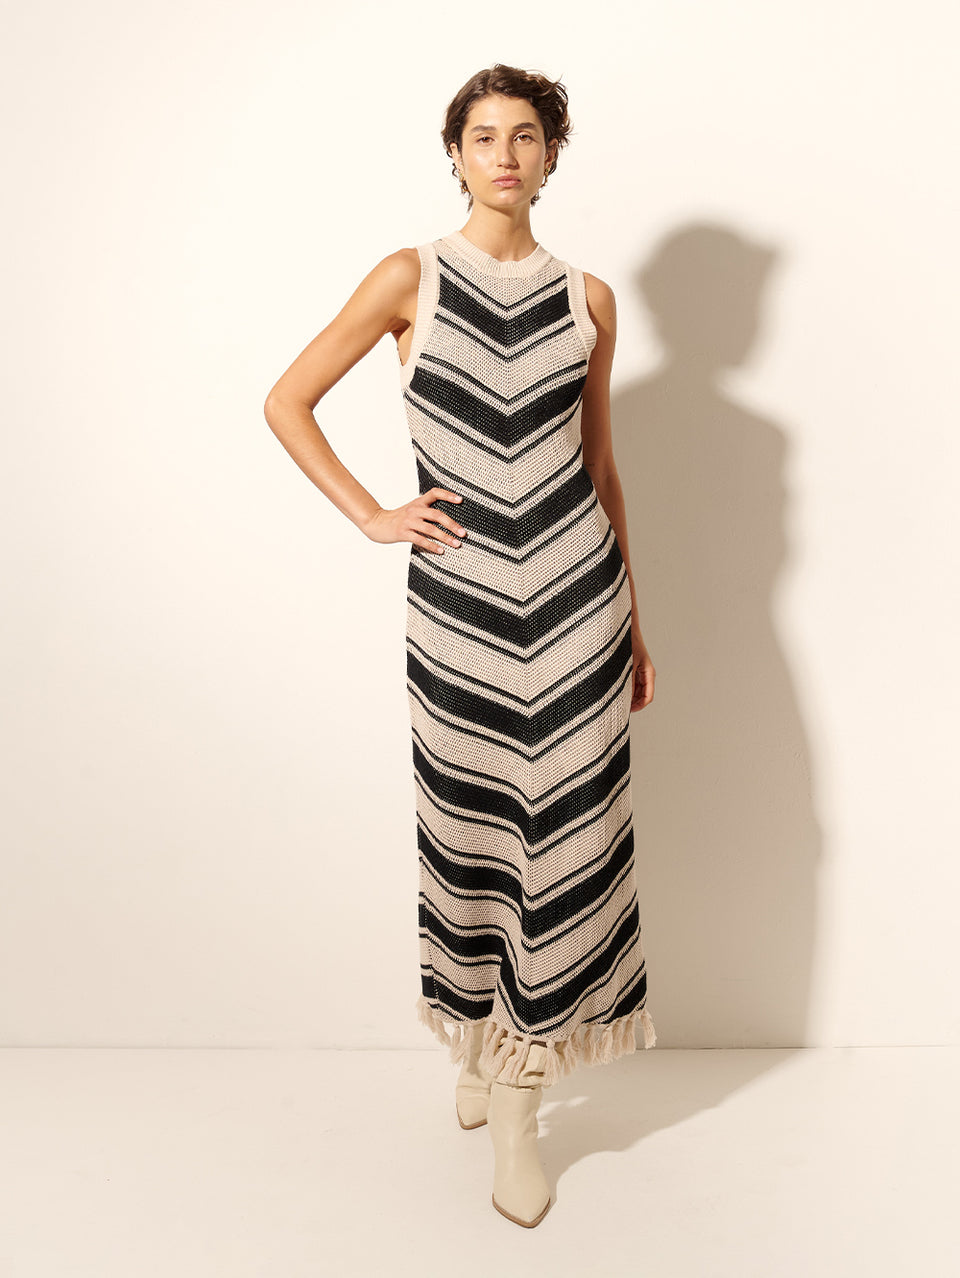 Anita Knit Midi Dress KIVARI | Model wears black and white chevron knit dress